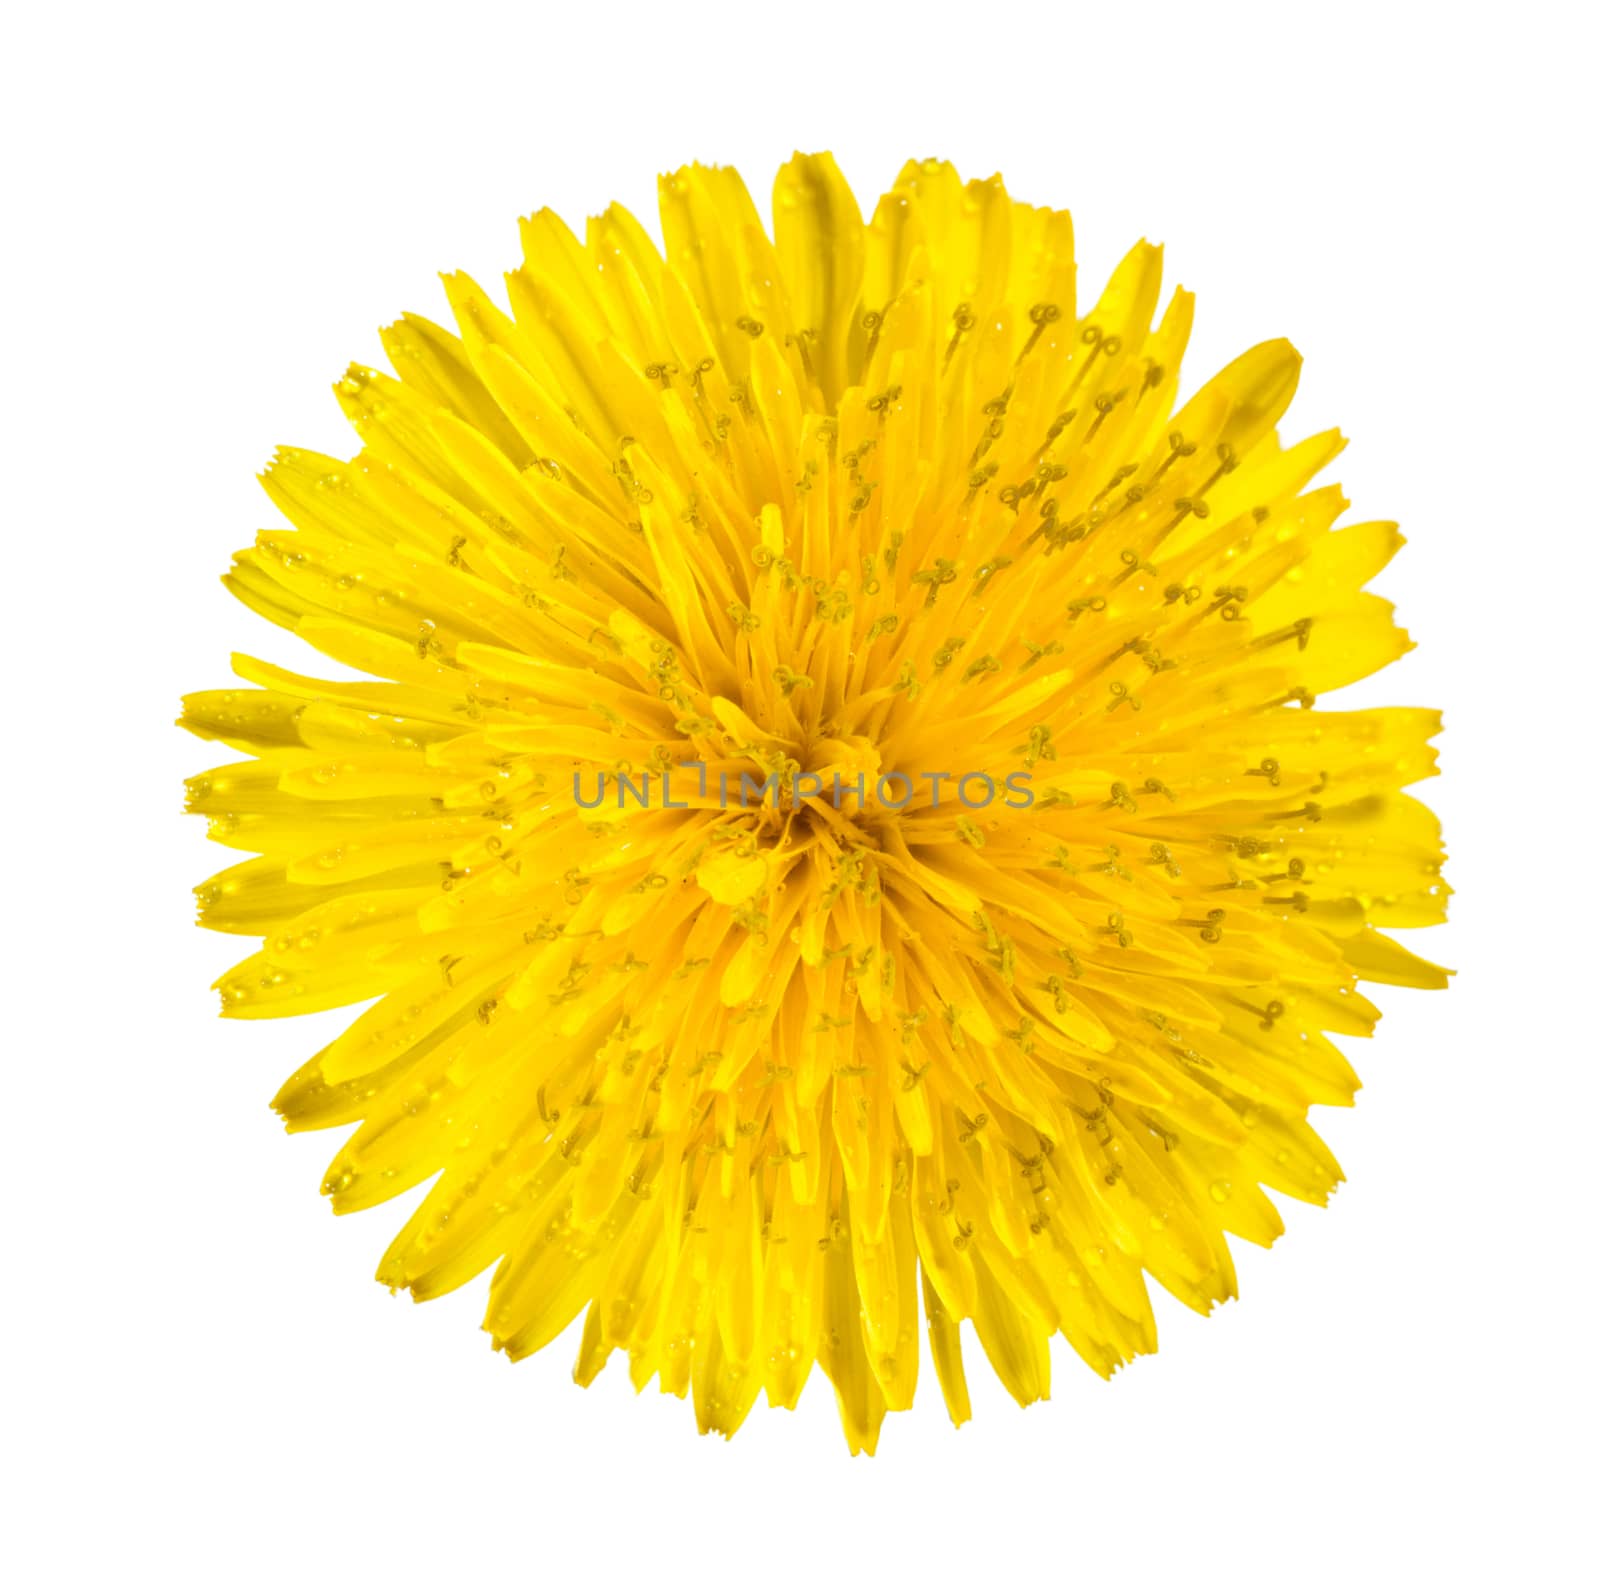 Yellow dandelion isolated on white